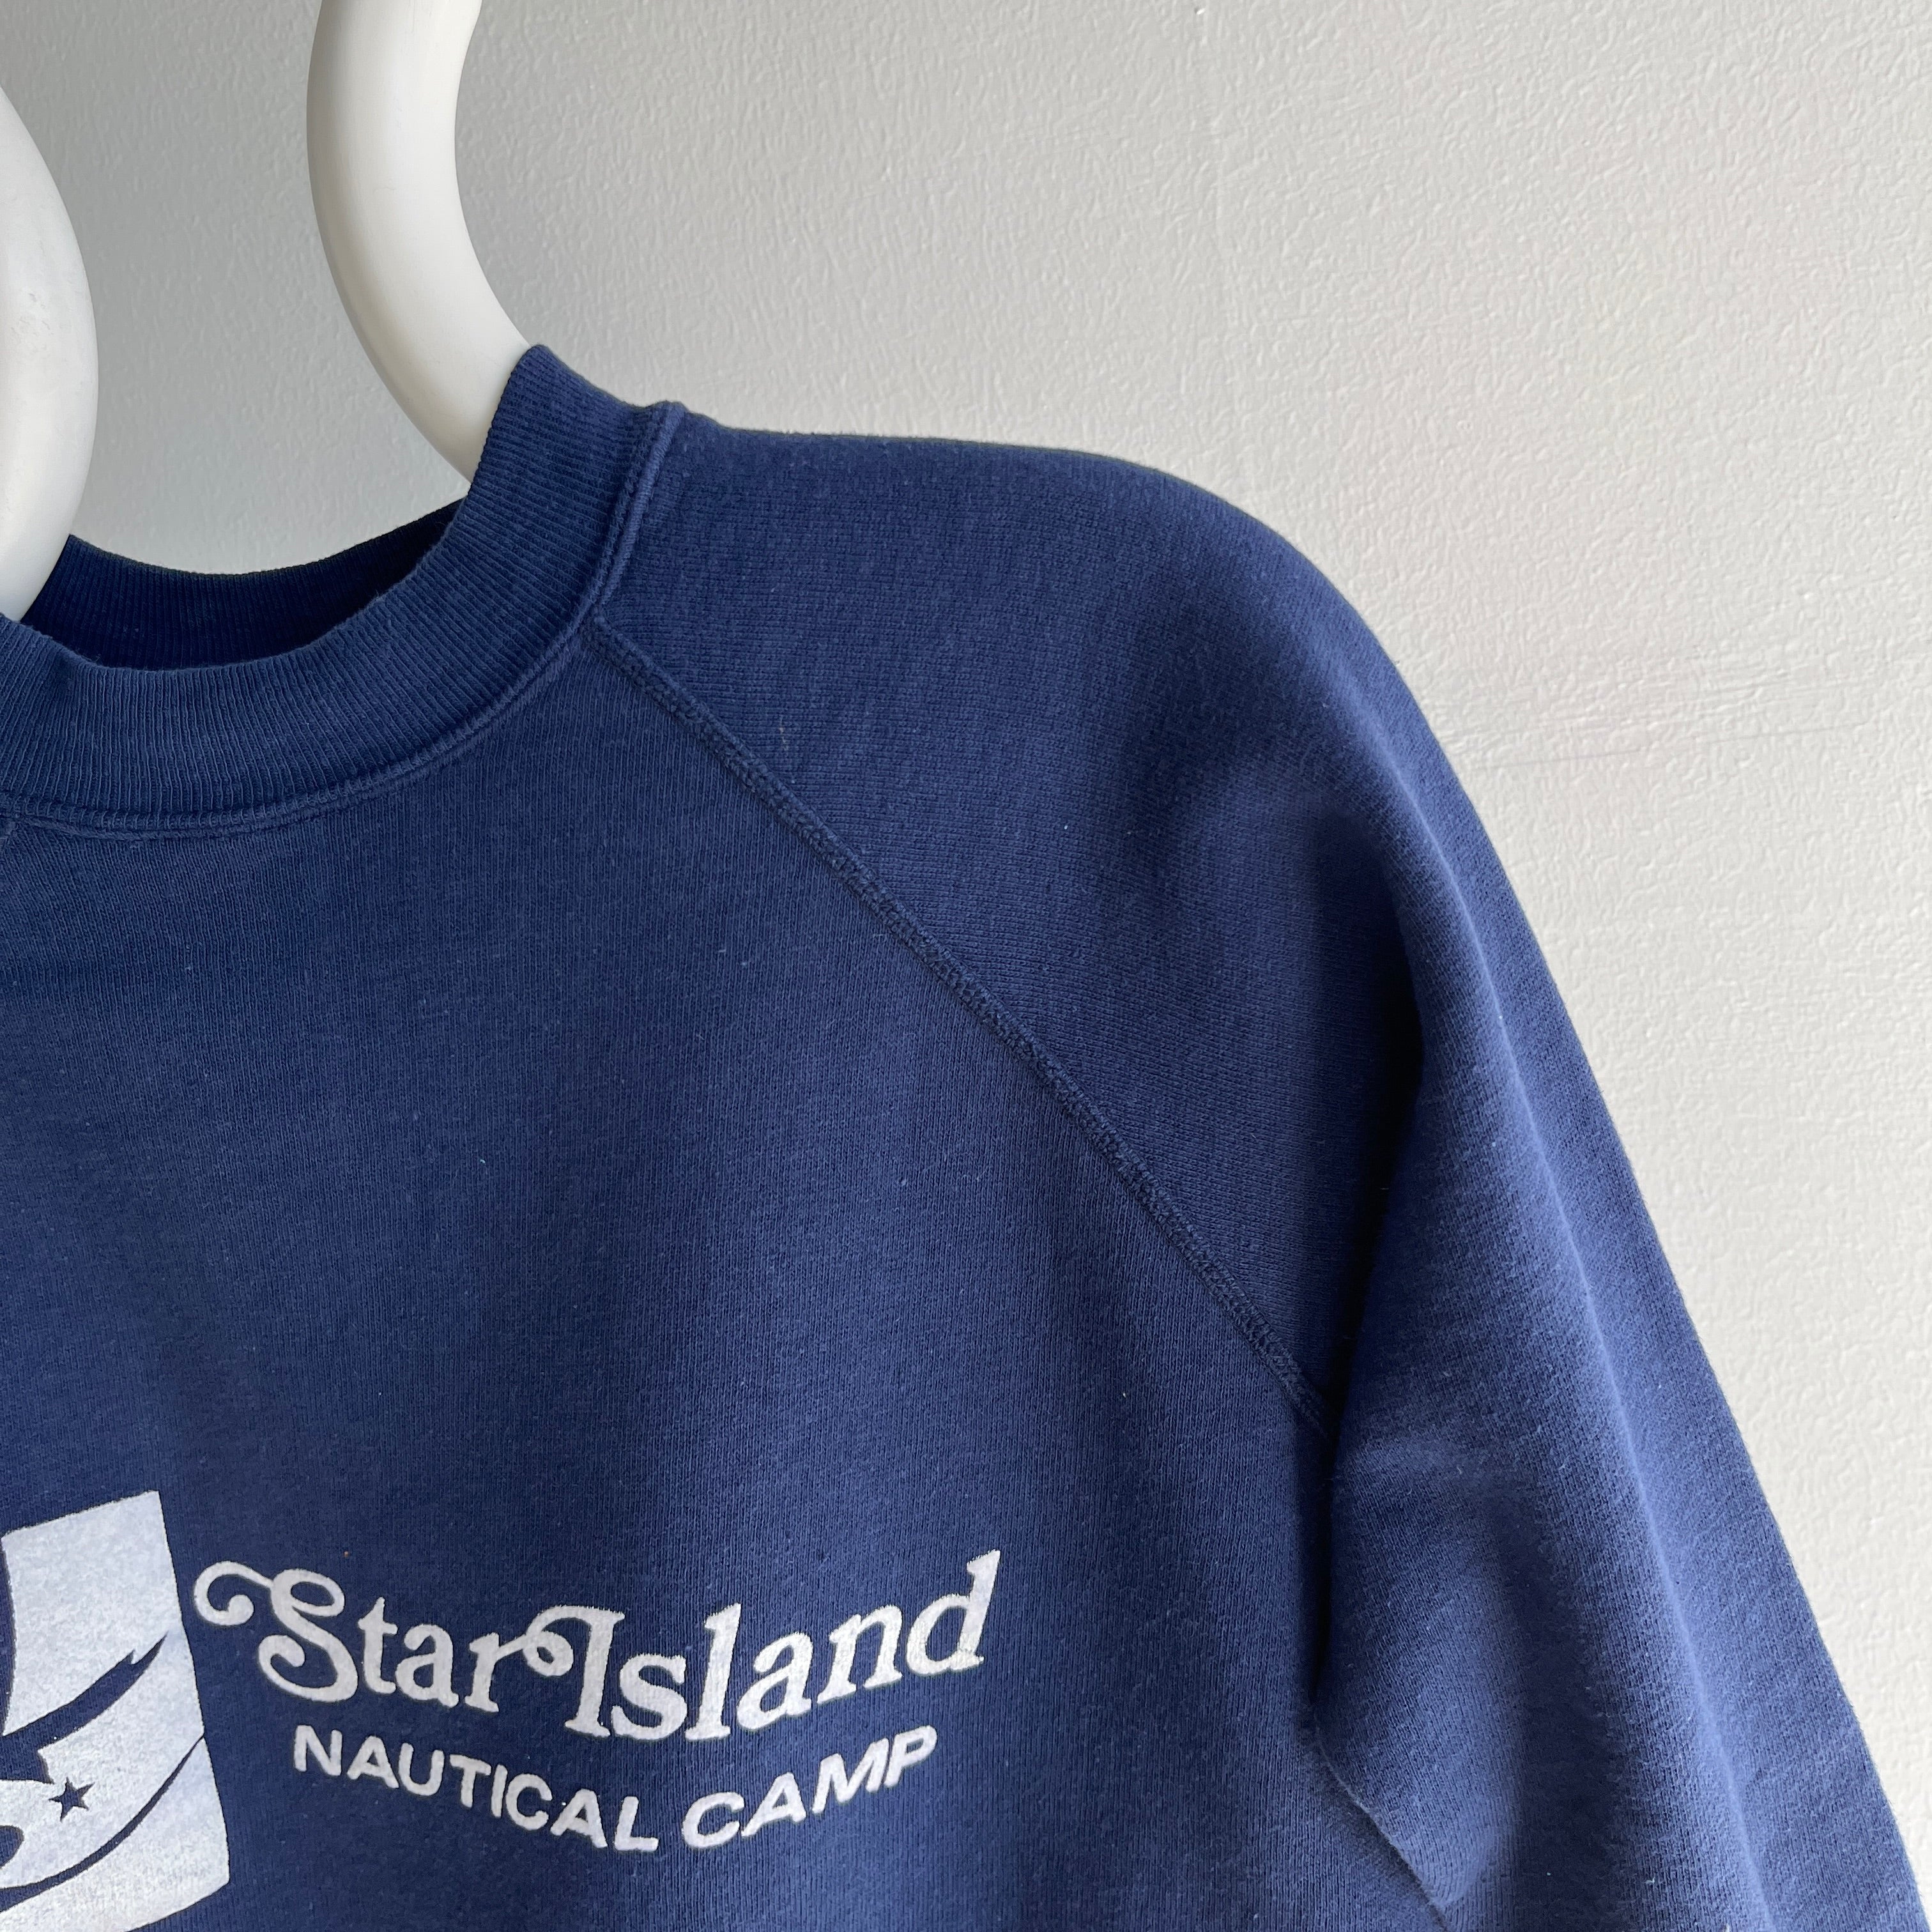 1970s (Early) Star Island Nautical Camp Velva Sheen Sweatshirt